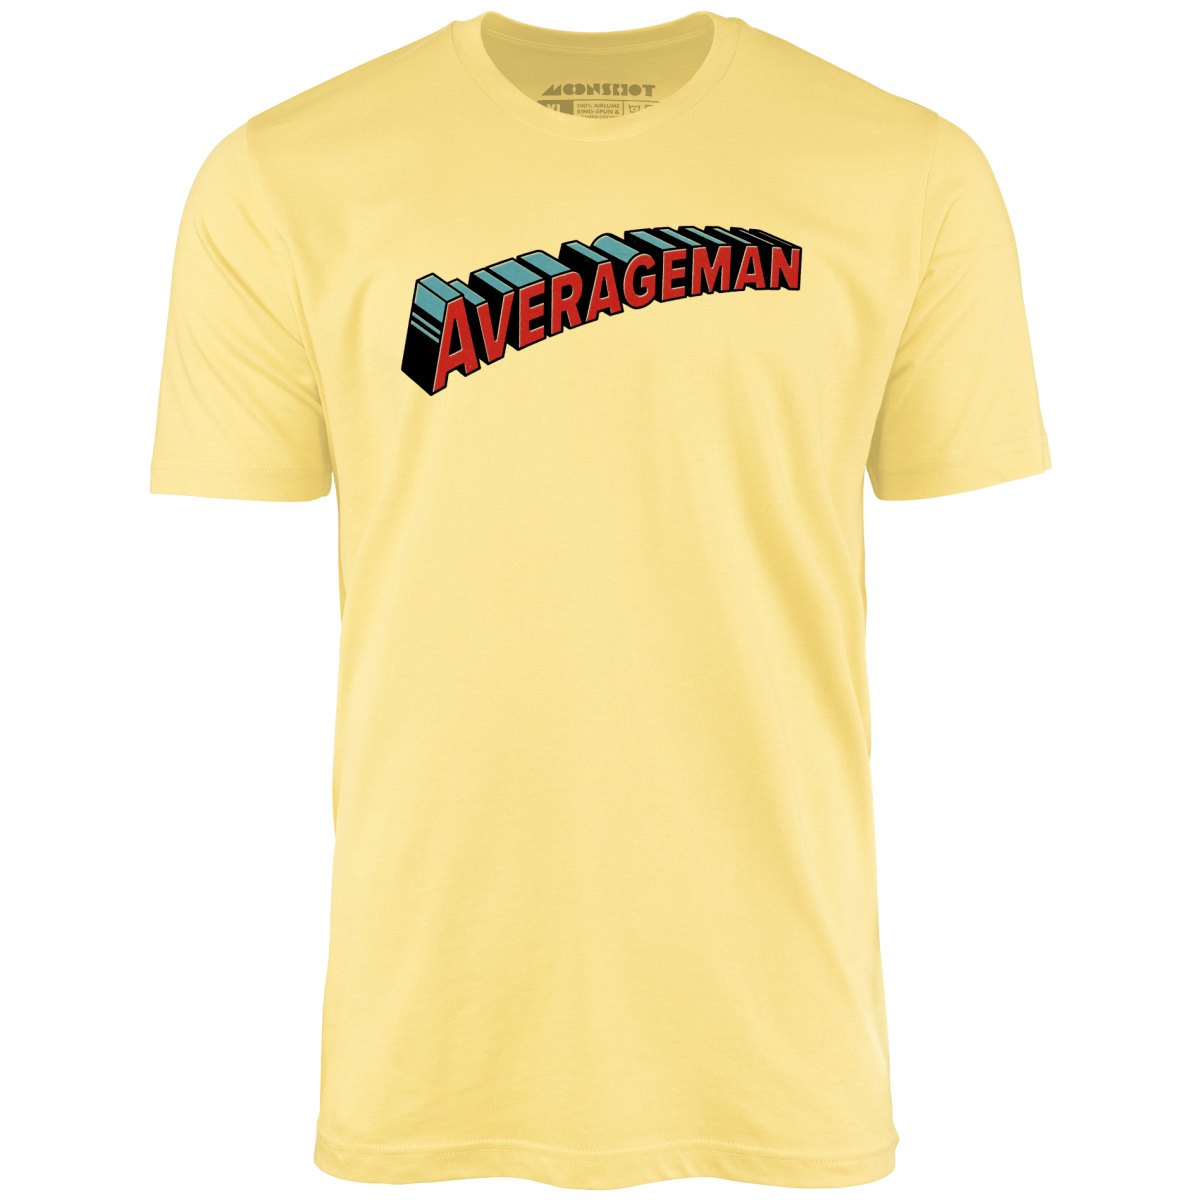 Averageman - Unisex T-Shirt